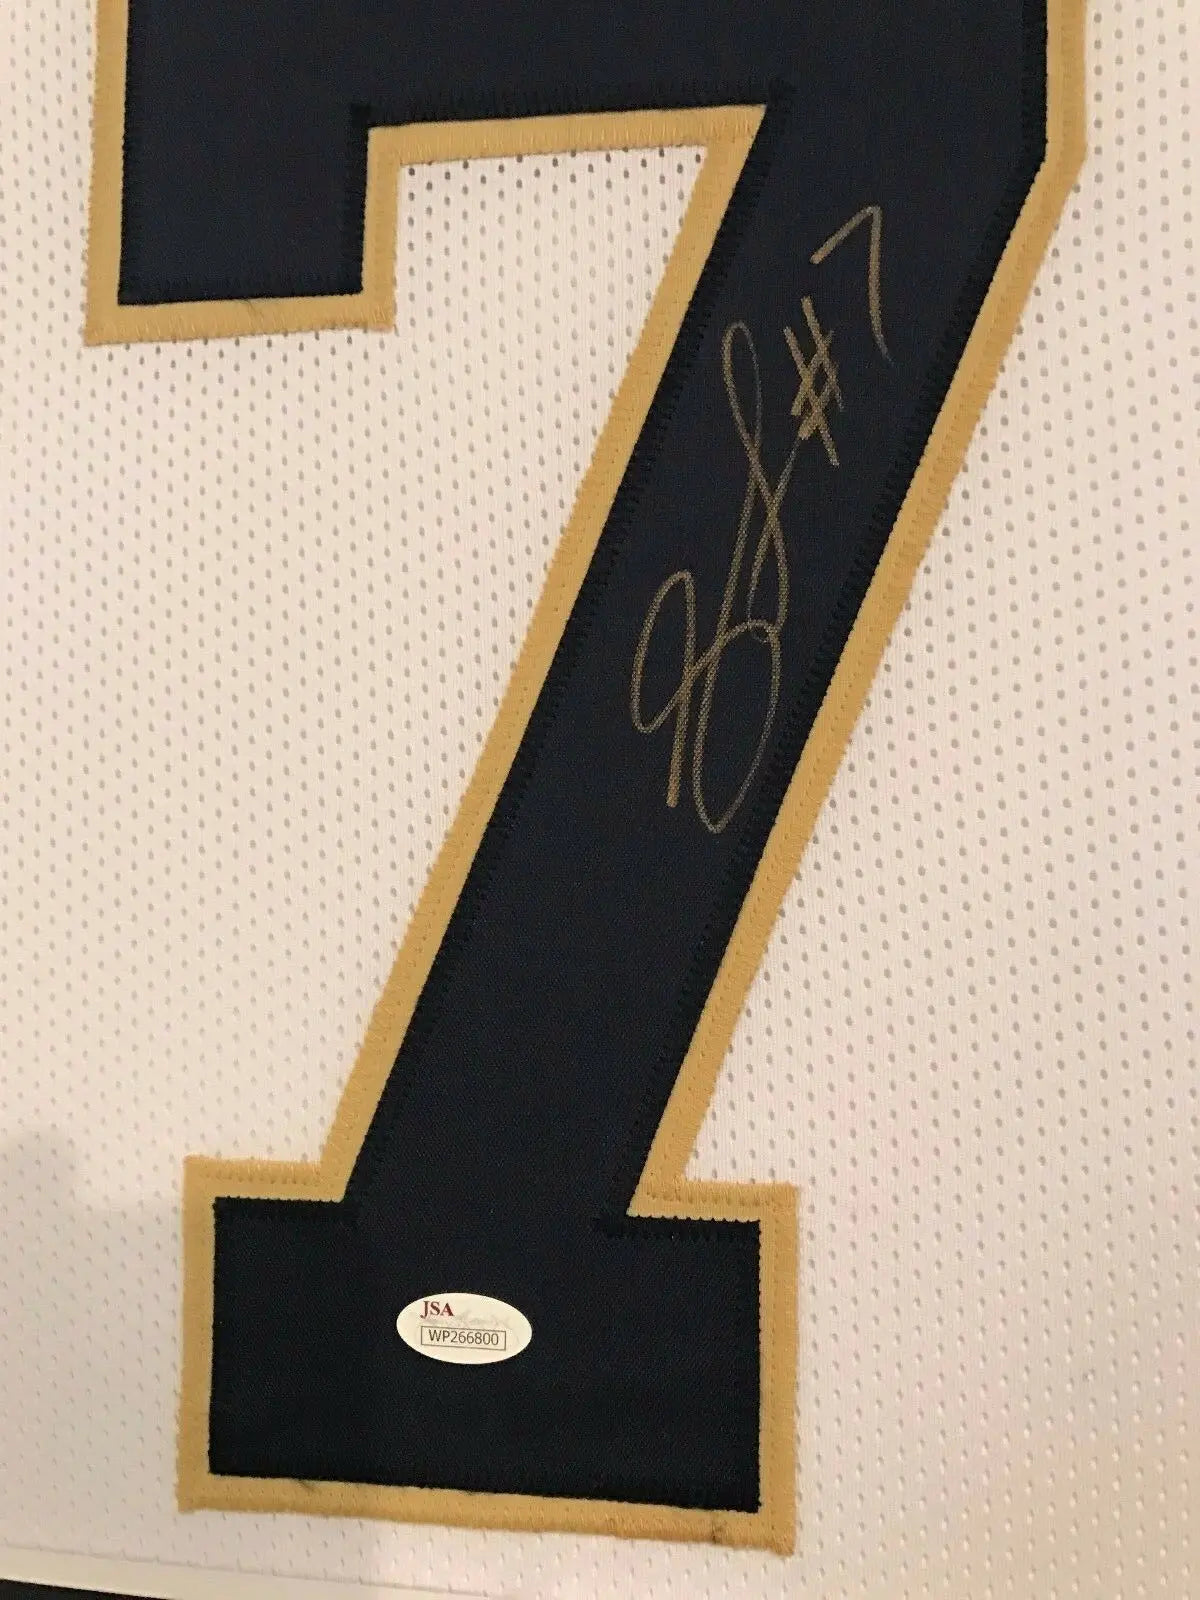 MVP Authentics Framed Stephon Tuitt Autographed Signed Notre Dame Jersey Jsa Coa 360 sports jersey framing , jersey framing